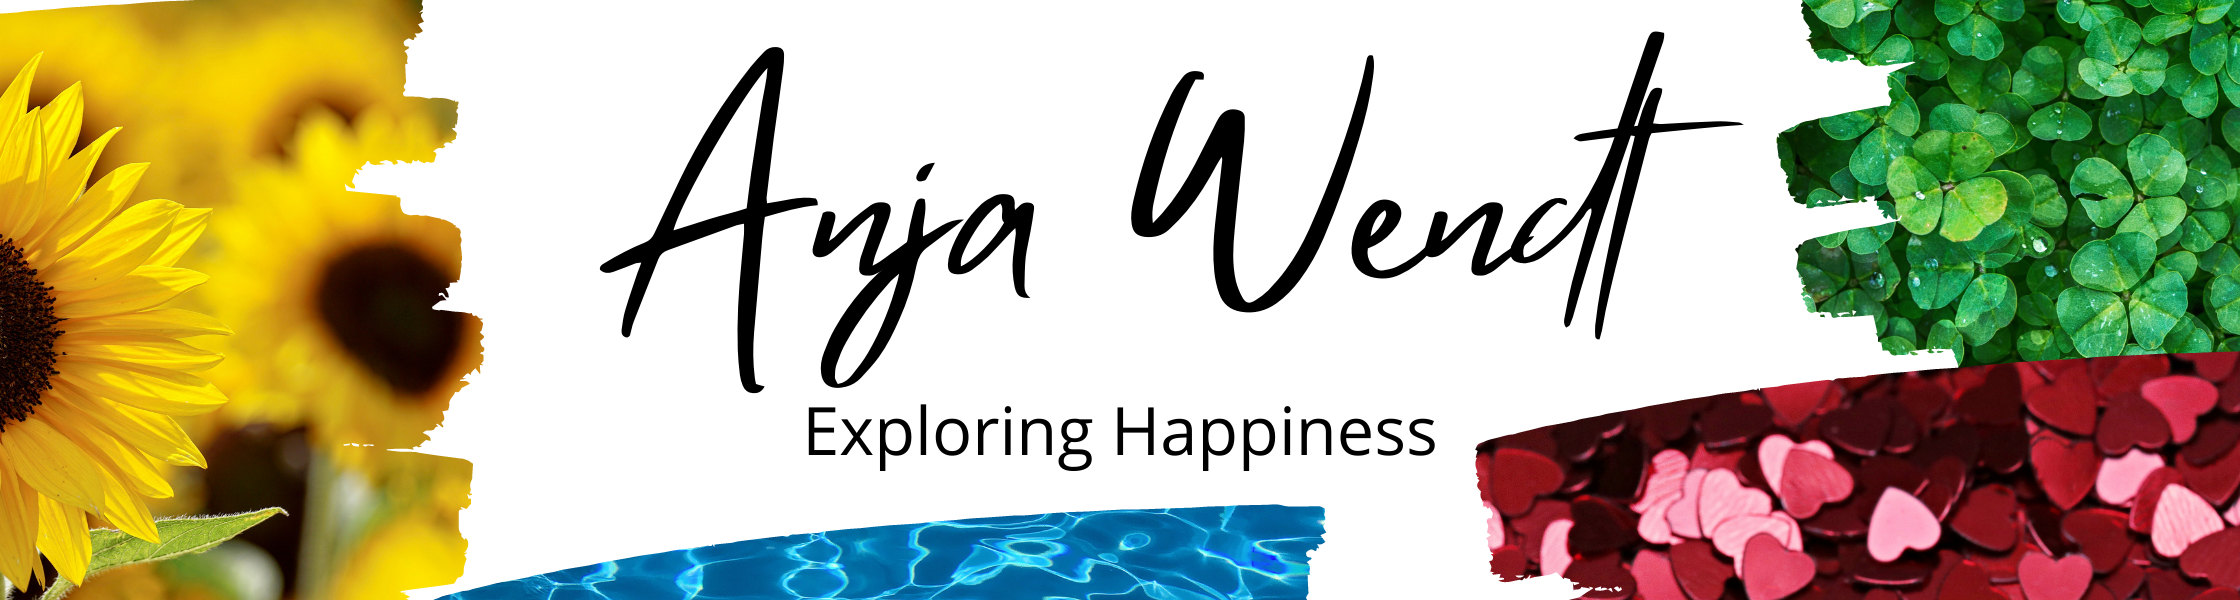 Anja Wendt Exploring Happiness Banner